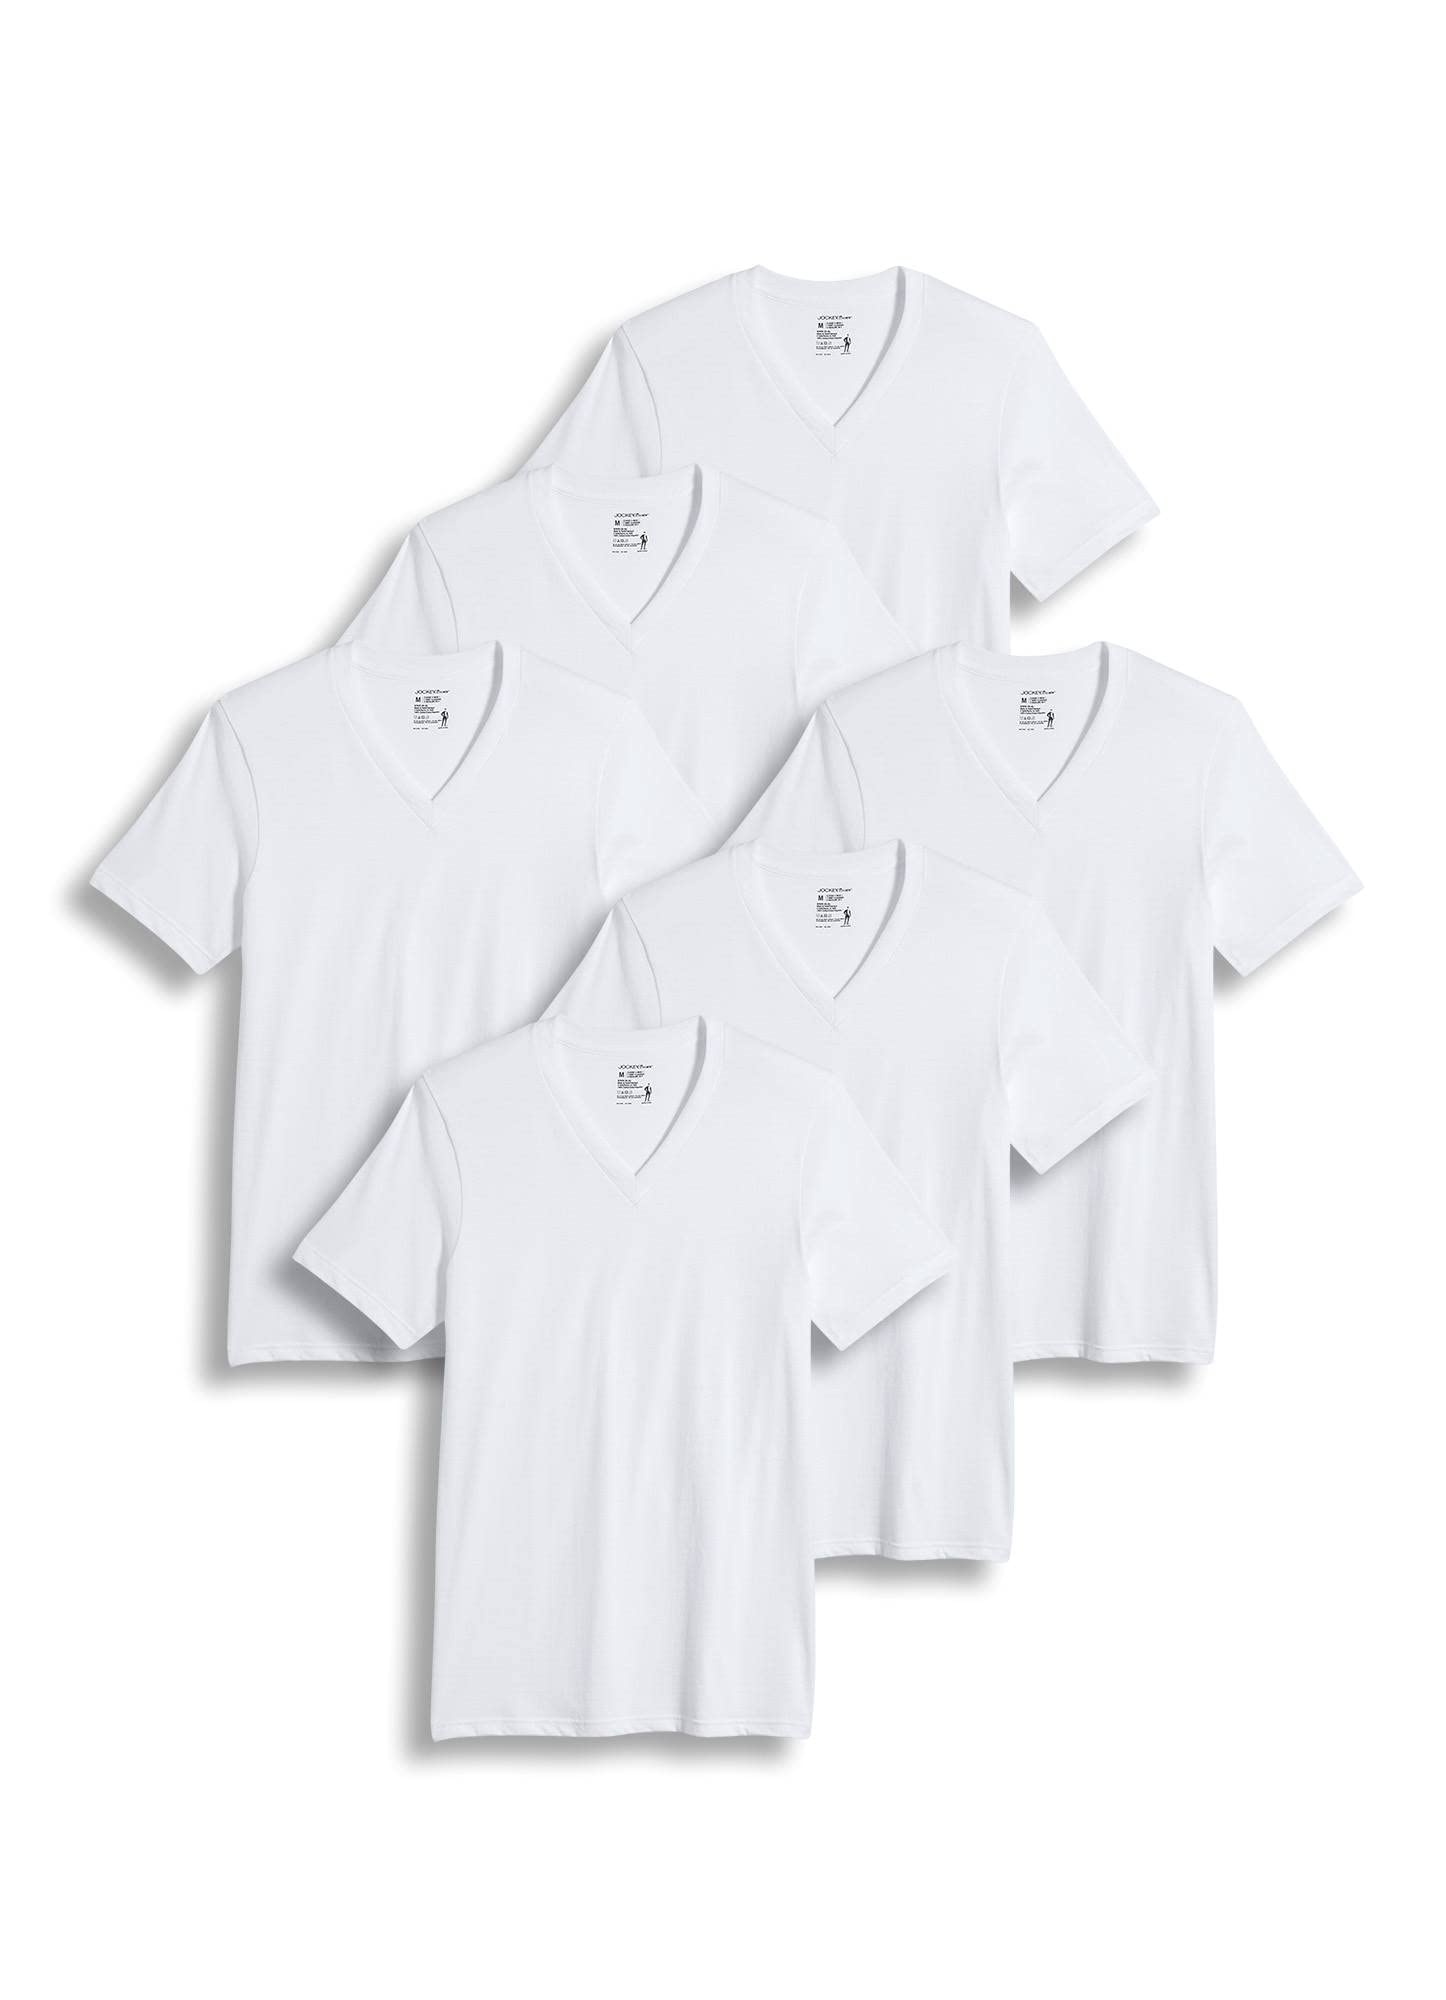 Jockey Men's Undershirt Classic V-Neck T-Shirt - 6 Pack